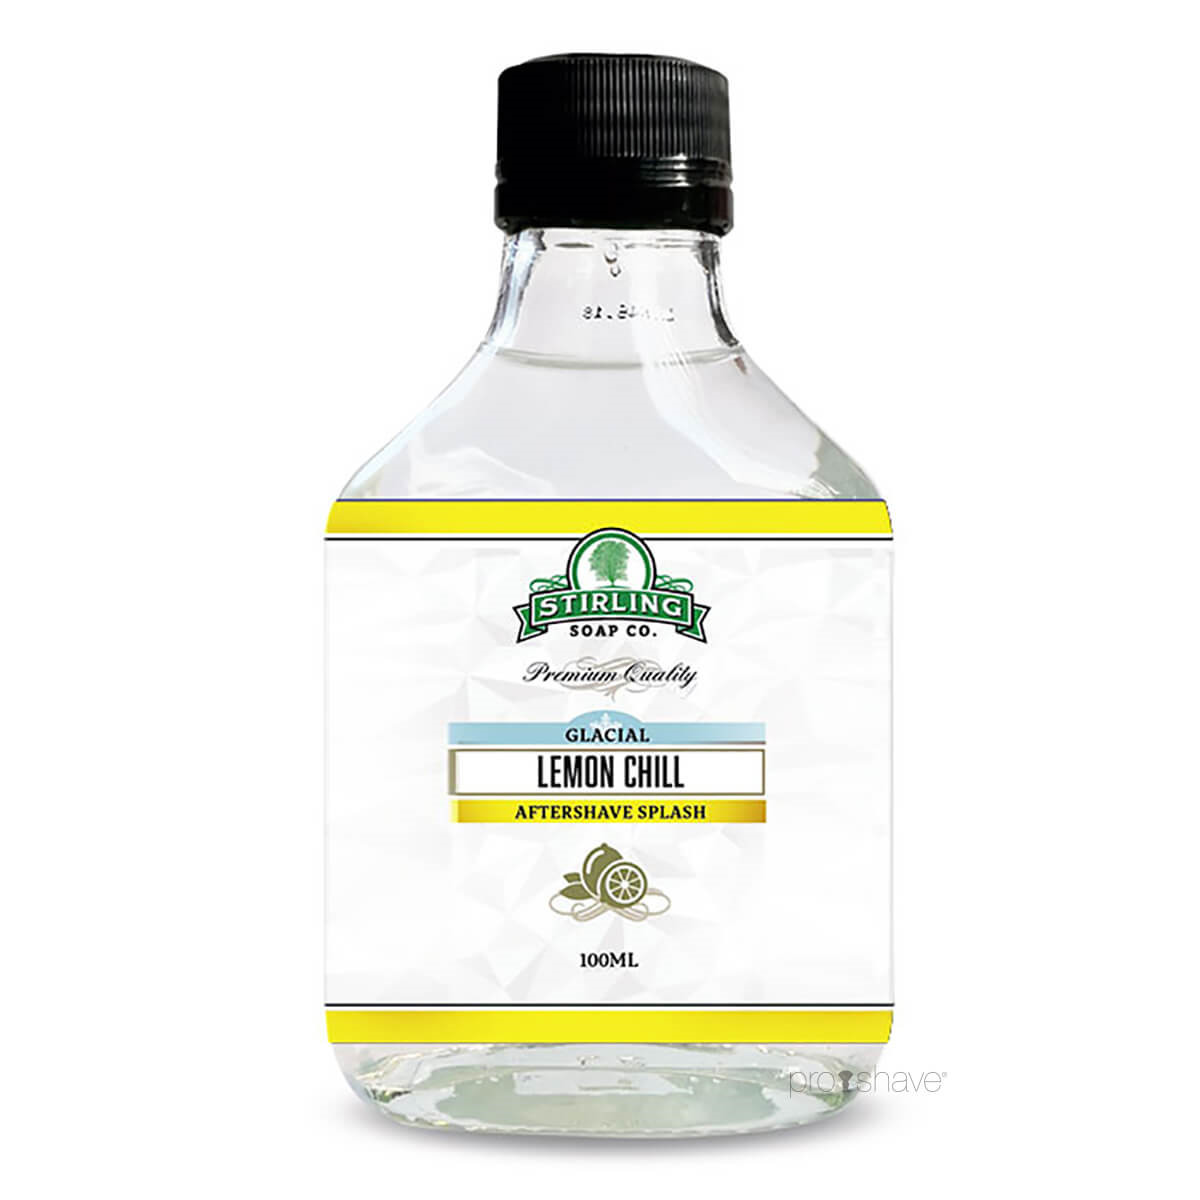 Stirling Soap Co. Aftershave Splash, Glacial - Lemon Chill, 100 ml.